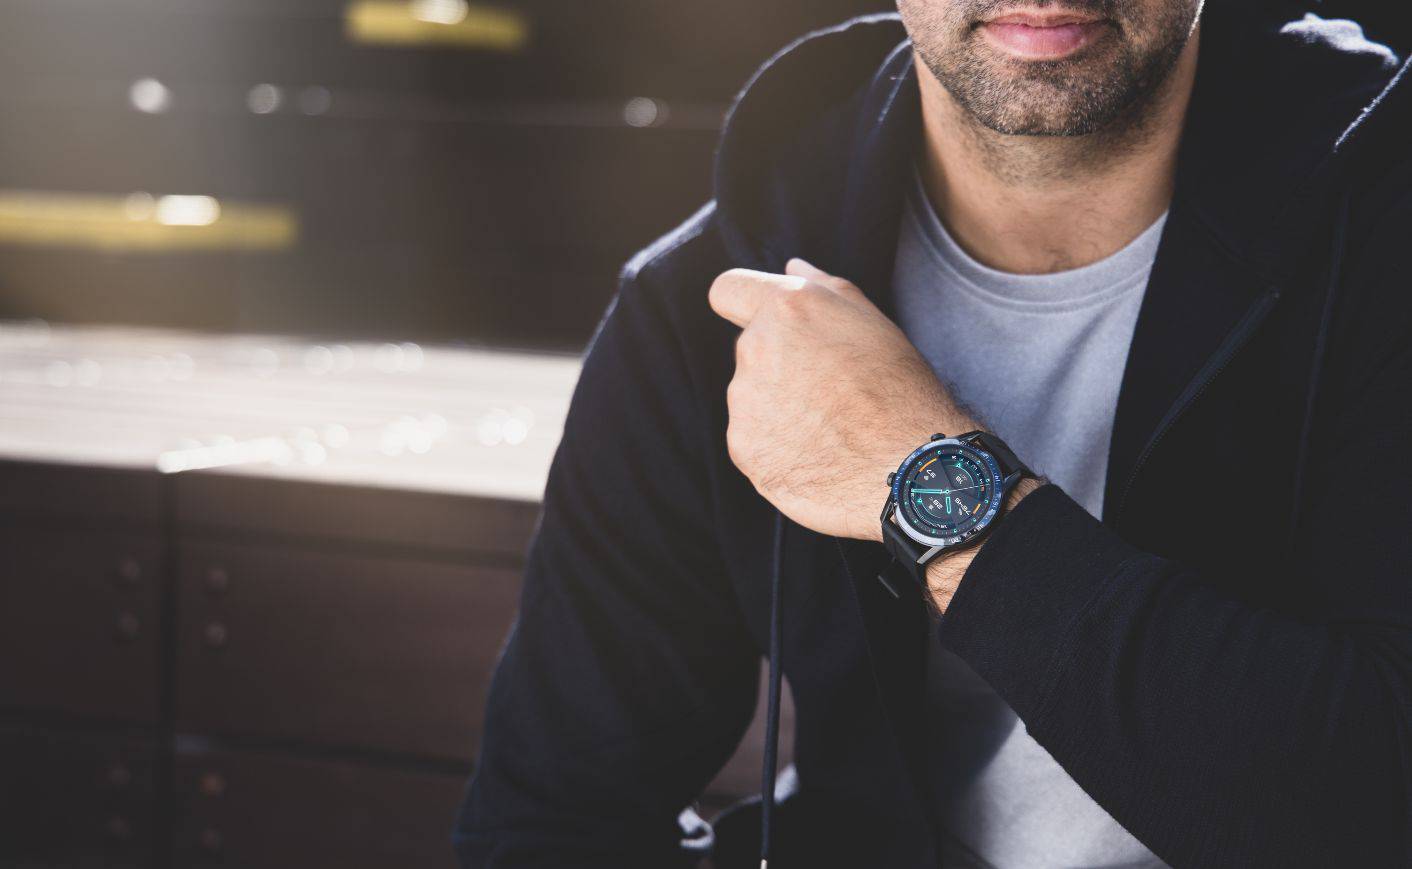 Huawei Watch  s navjerojatno izdržljivom baterijom